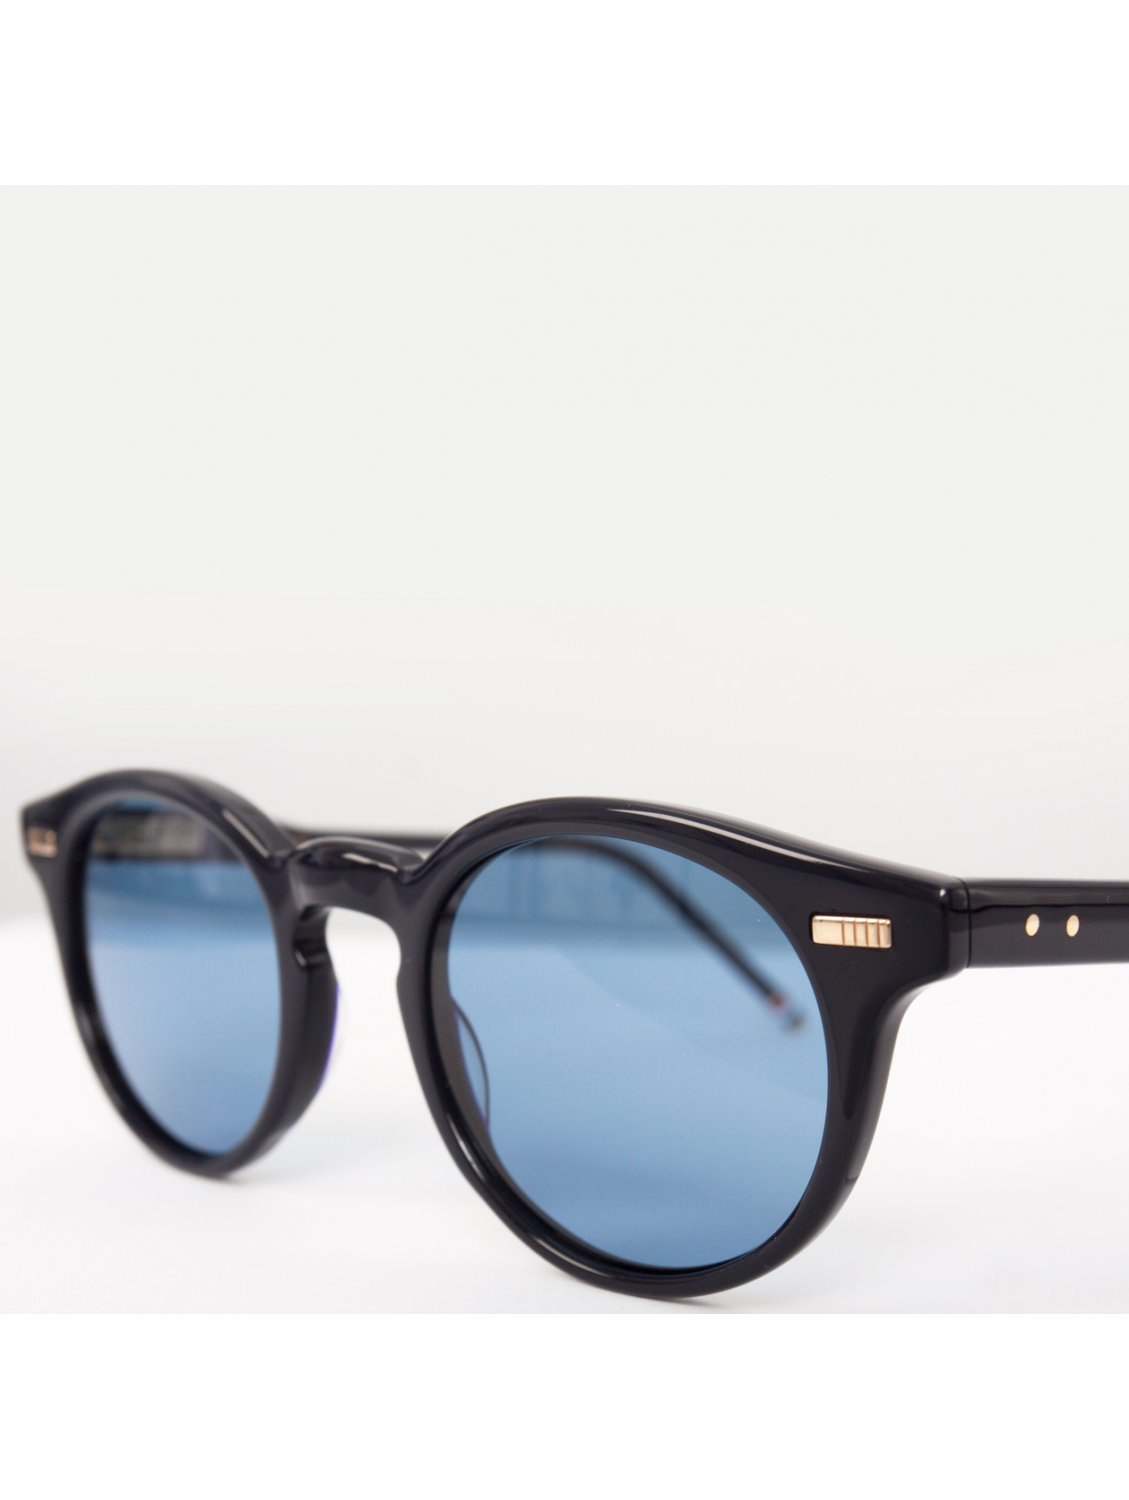 Thom Browne Round Frame Sunglasses Dark Navy Blue In Blue